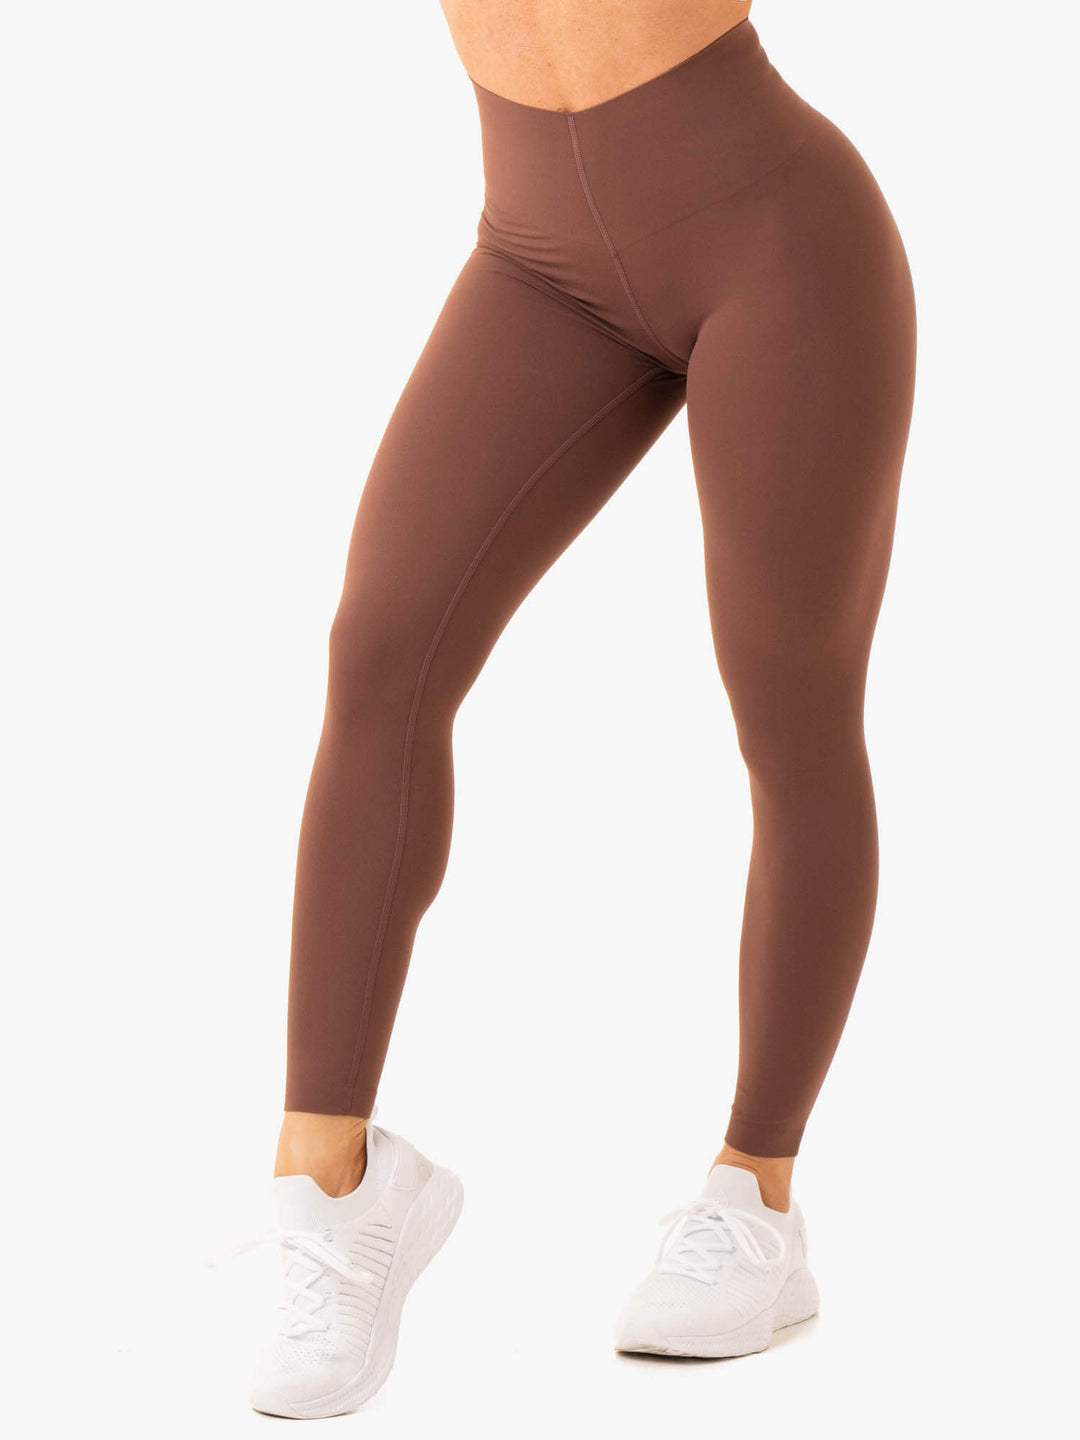 ZFLL Leggings,Seamless Leggings Women Fitness Leggings High Waist Push Up  Pants Workout Gym Sport Leggings,Pants Dark Brown,L : Amazon.co.uk: Fashion